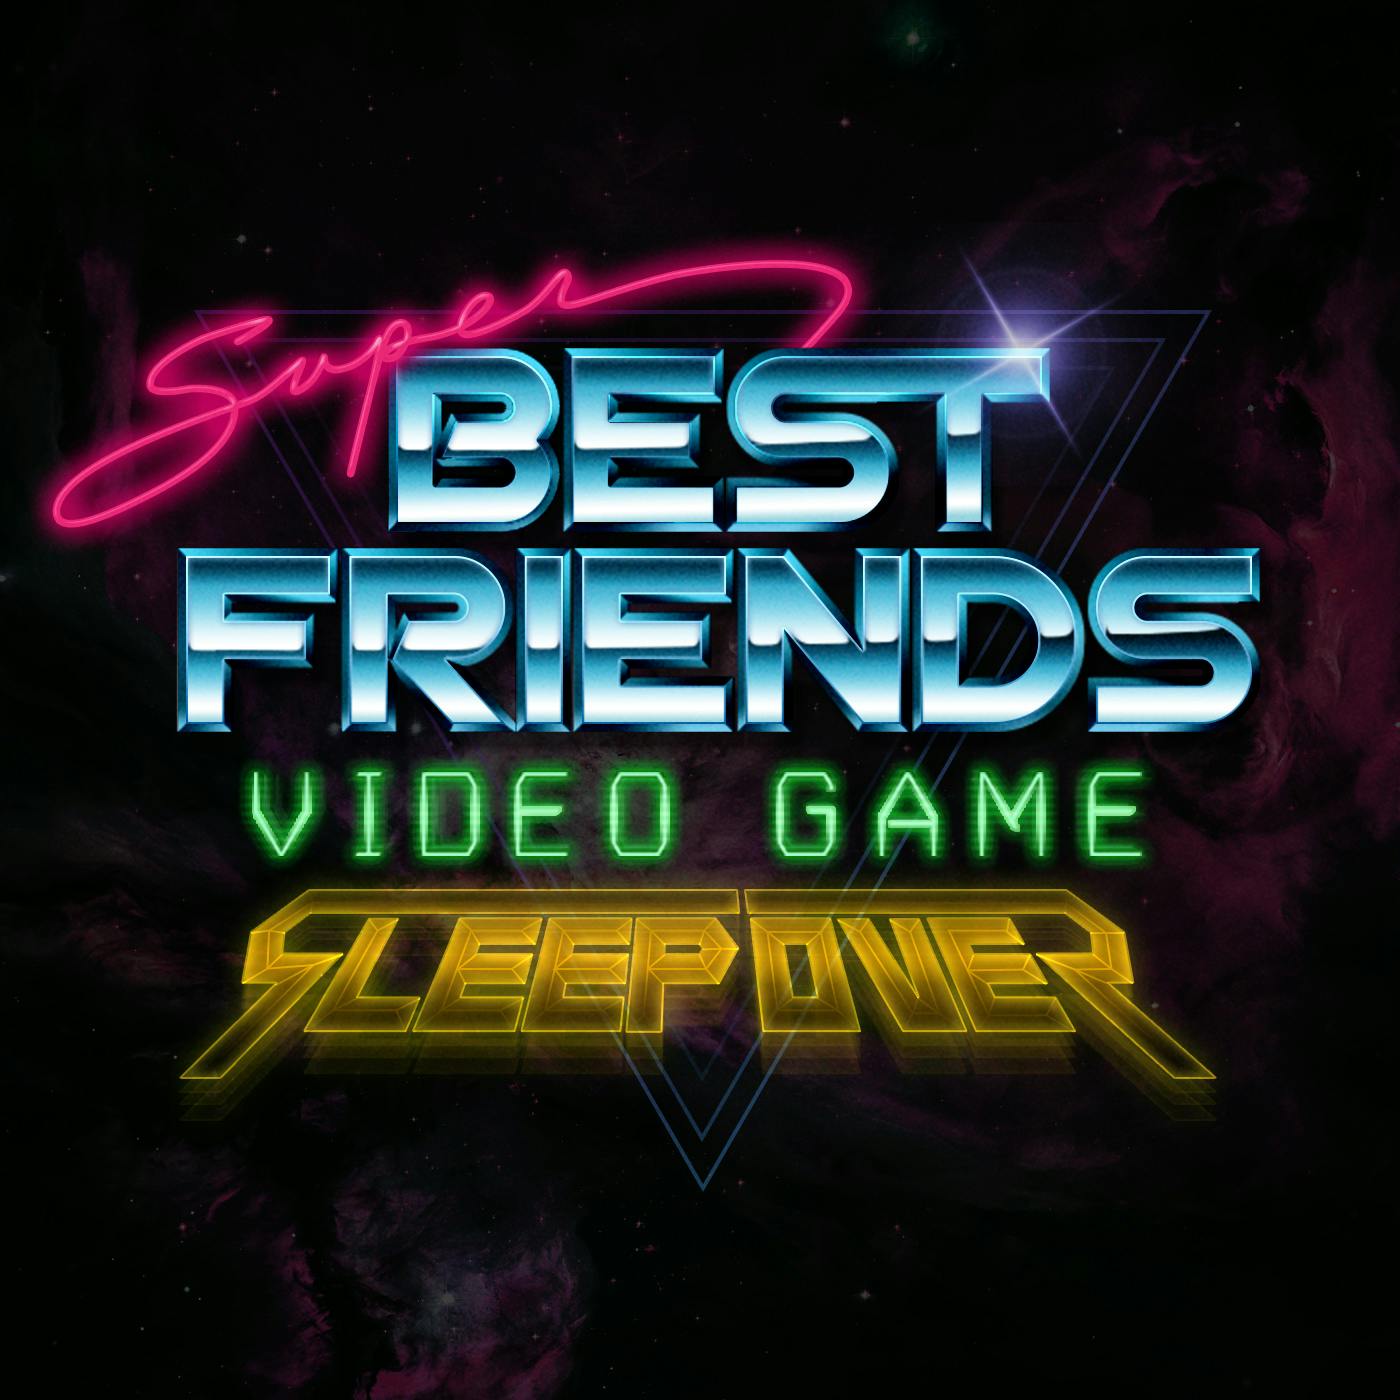 Super Best Friends Video Game Sleepover - Episode 47